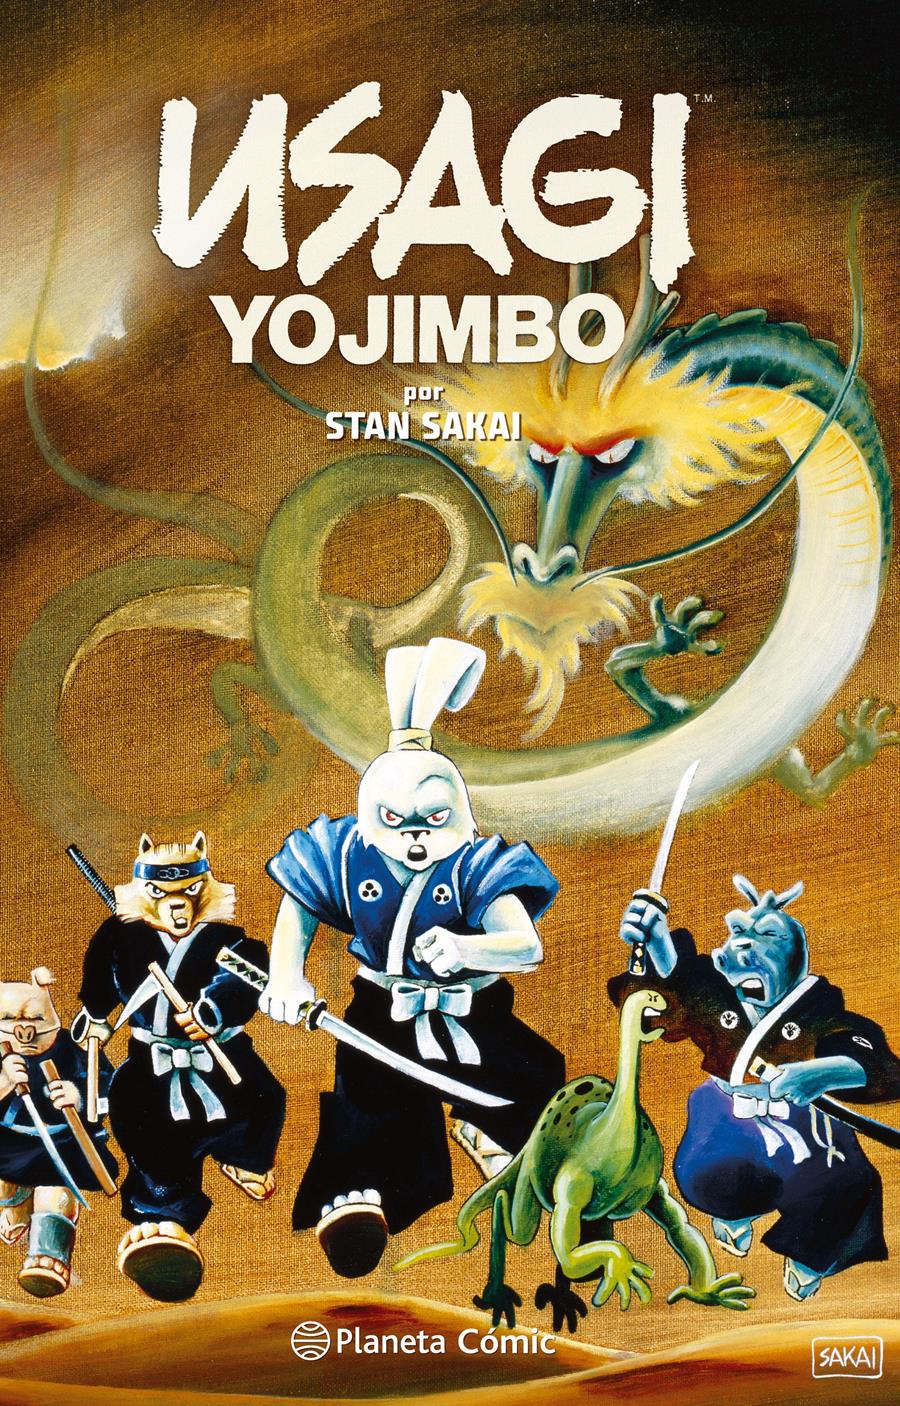 Usagi Yojimbo Fantagraphics Collection nº 01/02  | N0117-PLAN22 | Stan Sakai | Terra de Còmic - Tu tienda de cómics online especializada en cómics, manga y merchandising